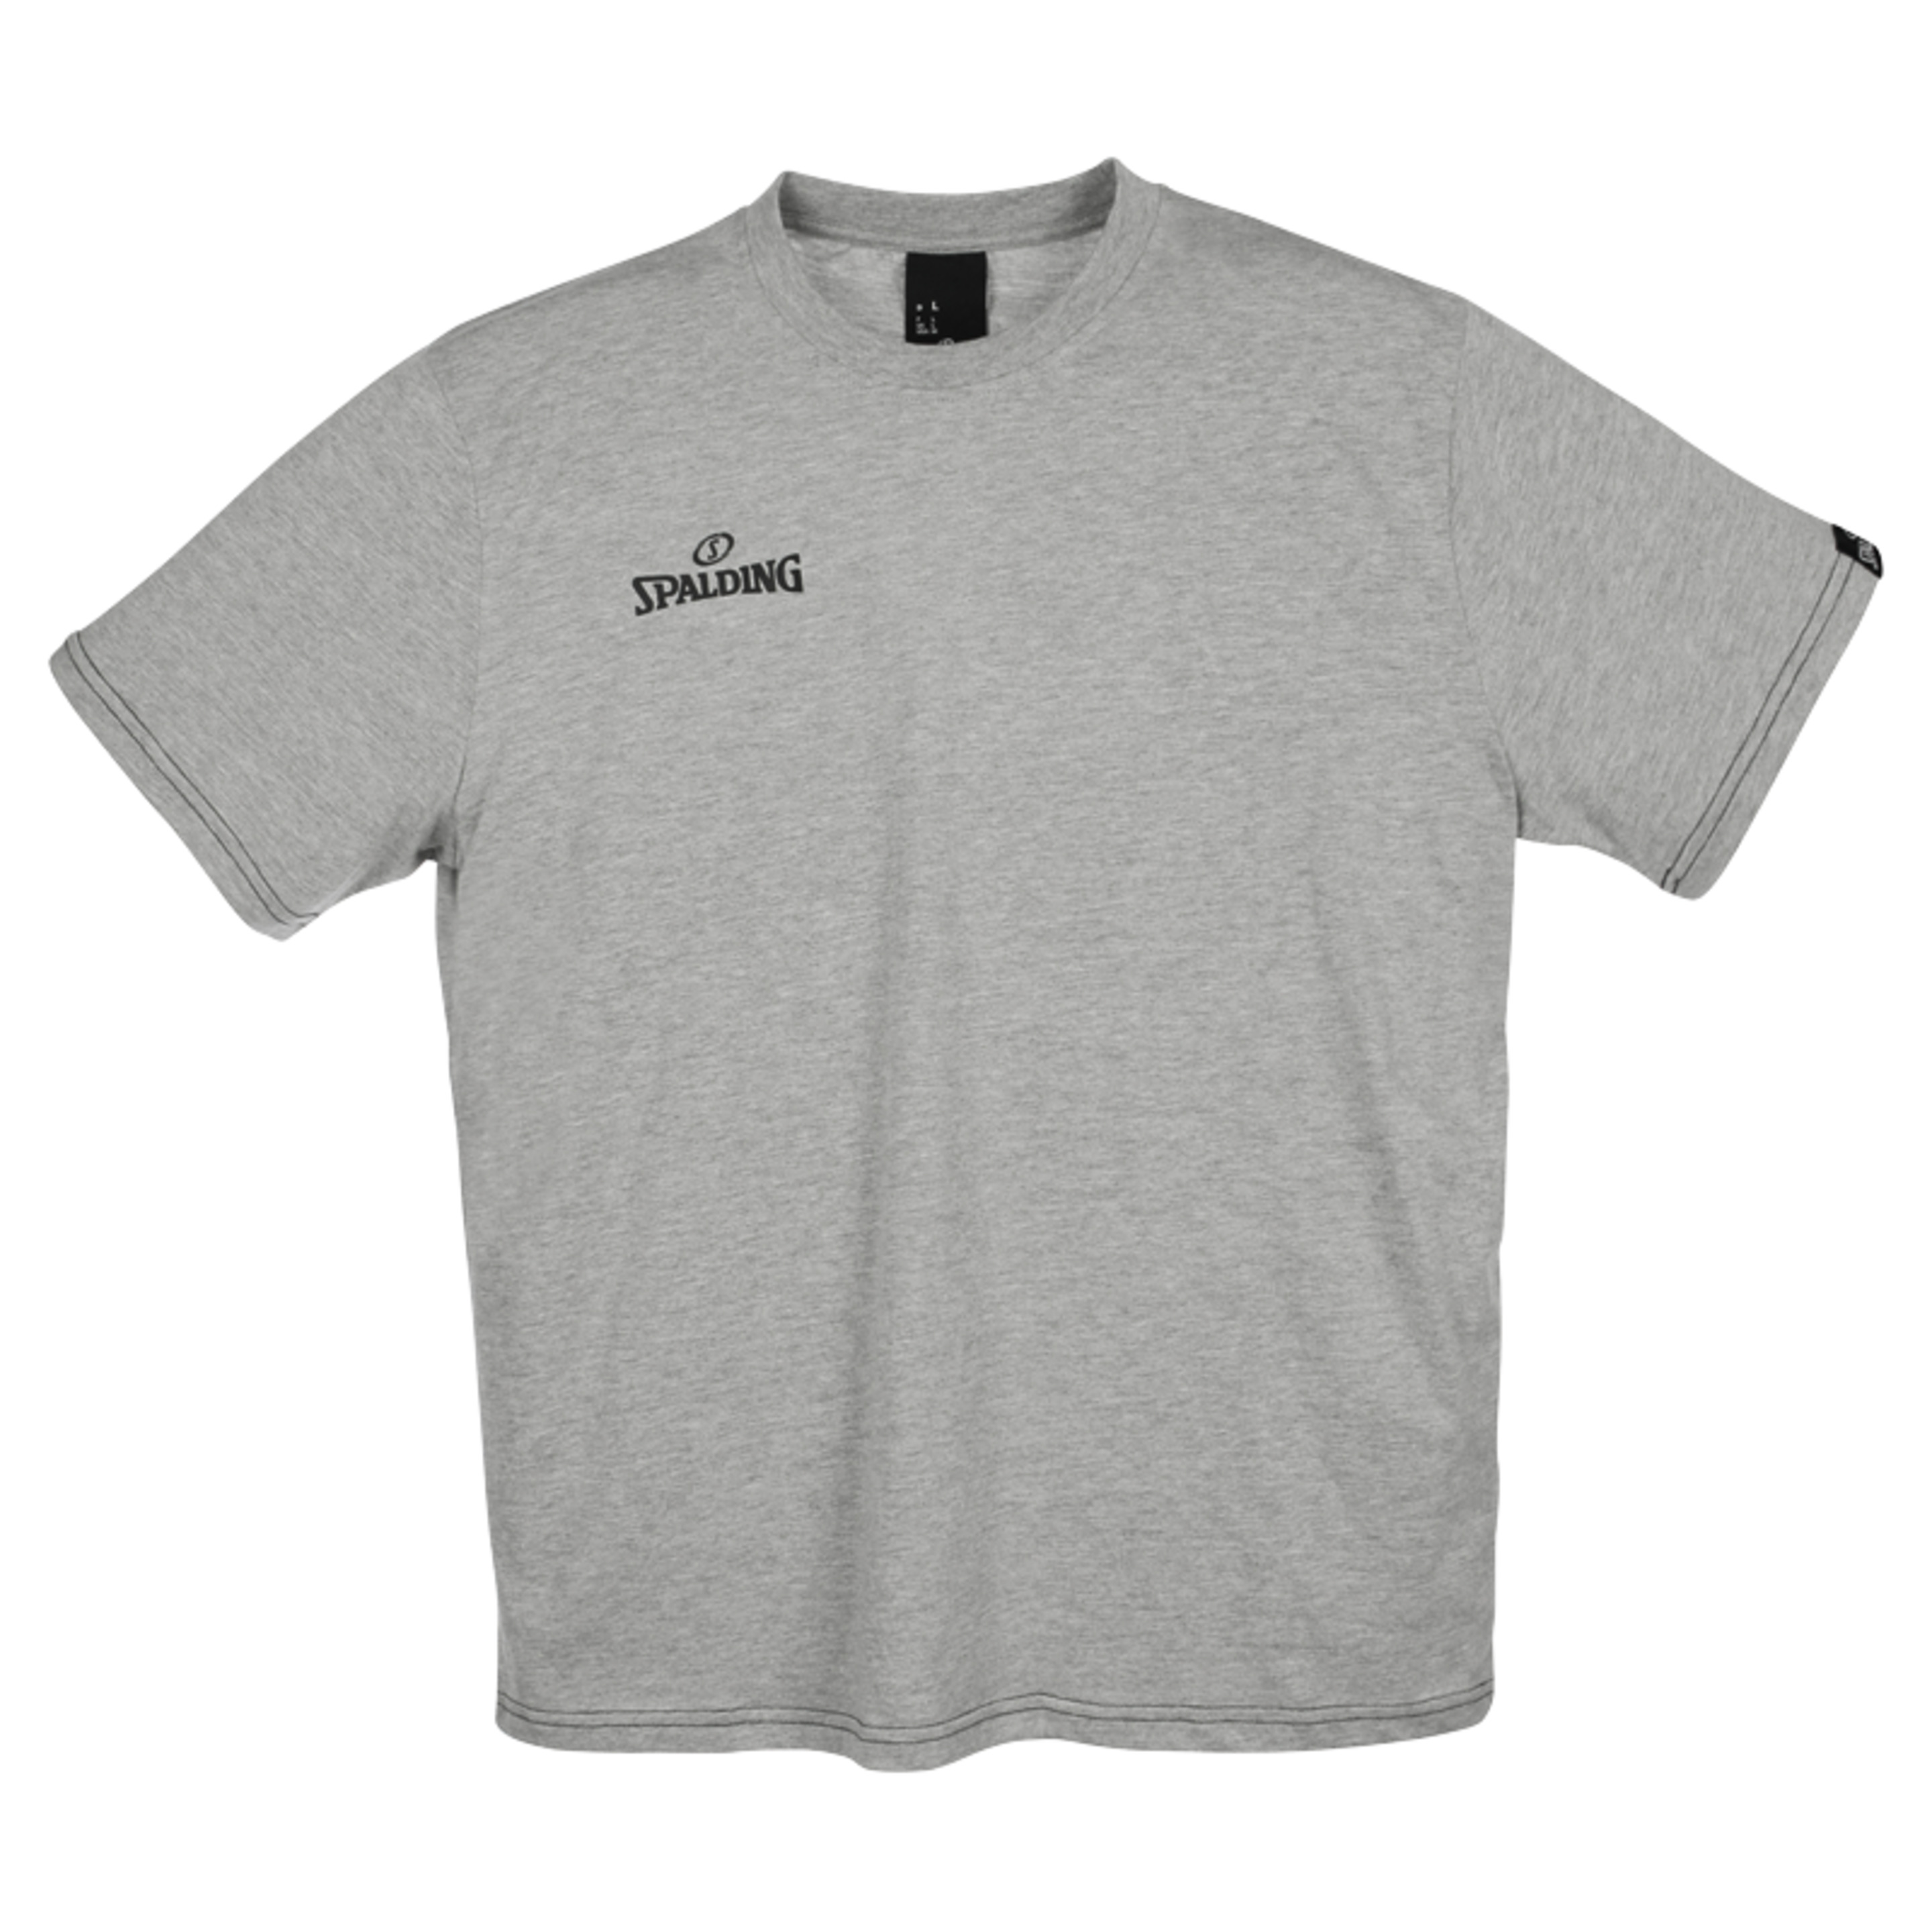 Team Ii T-shirt Gris Melange Spalding - gris - Camiseta De Baloncesto Team Ii T-shirt  MKP